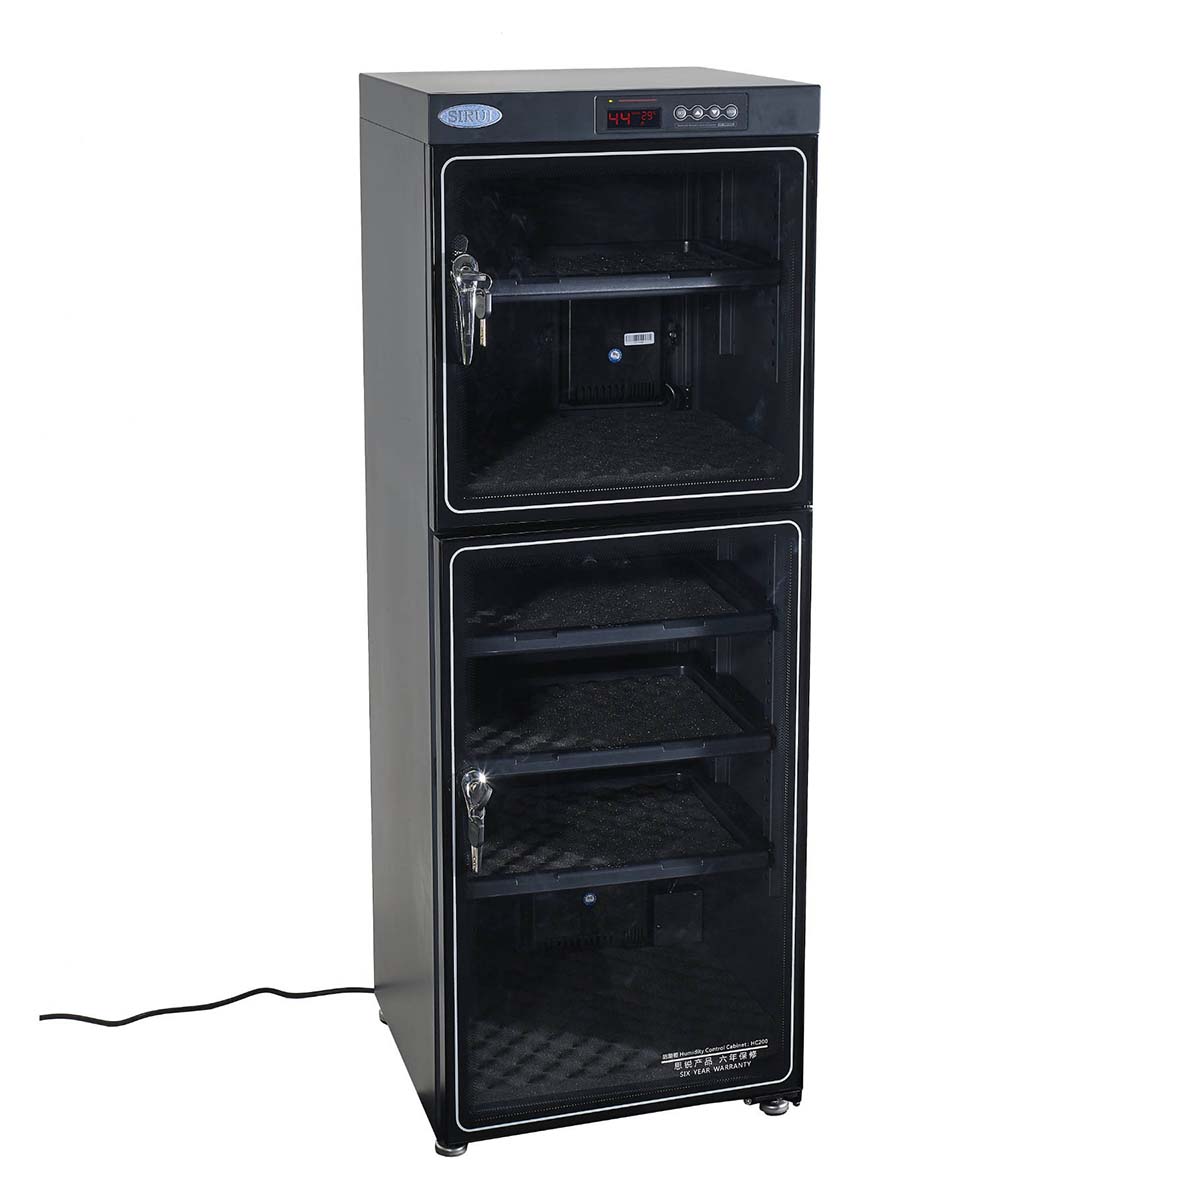 SIRUI HC-200 Humidor / Humidity Control Cabinet 200L Volume